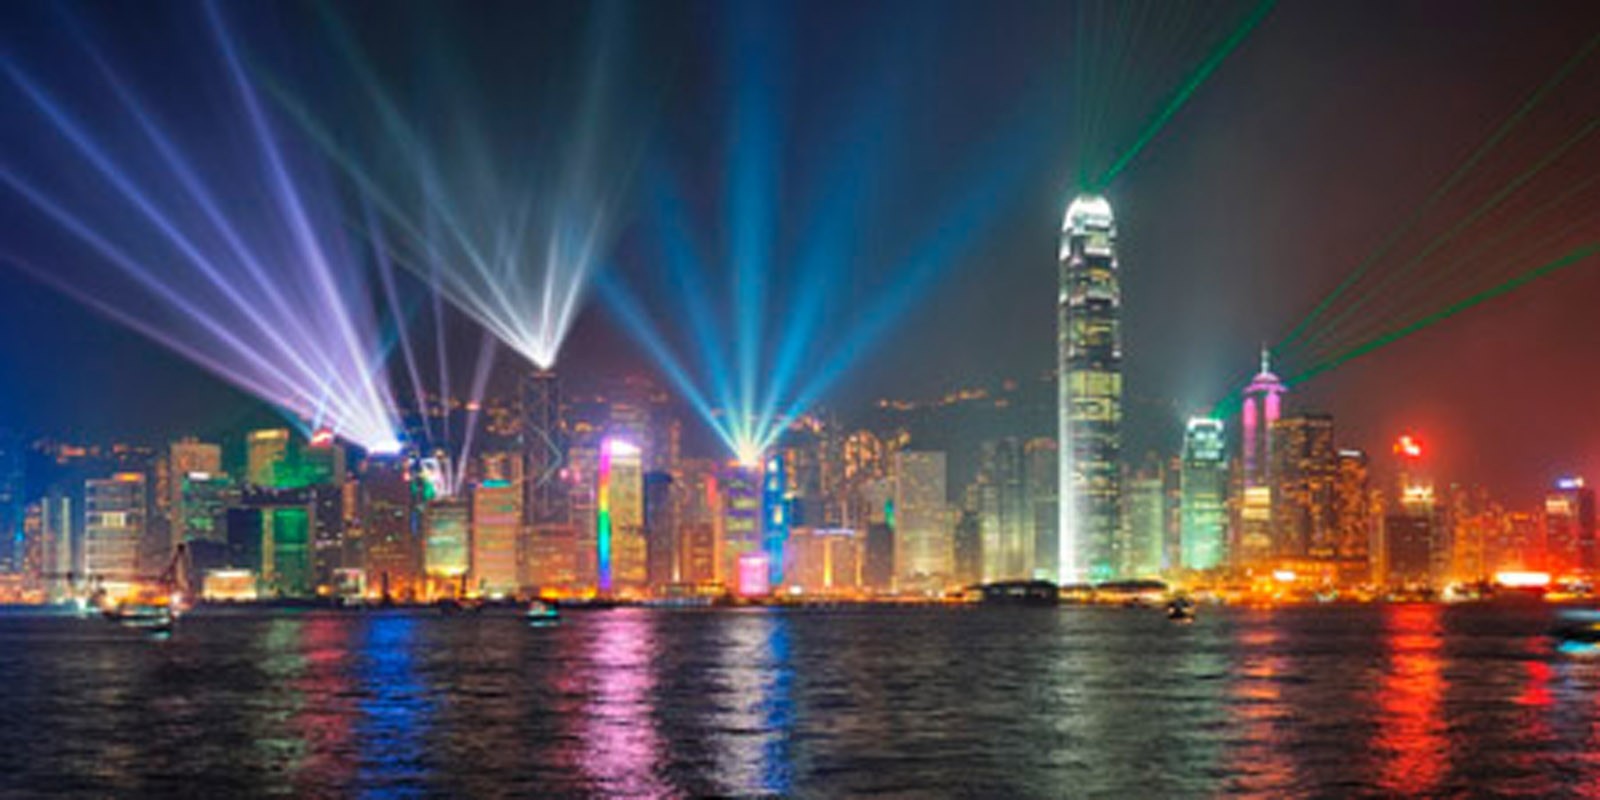 Anonymous - Symphony of lights, Hong Kong